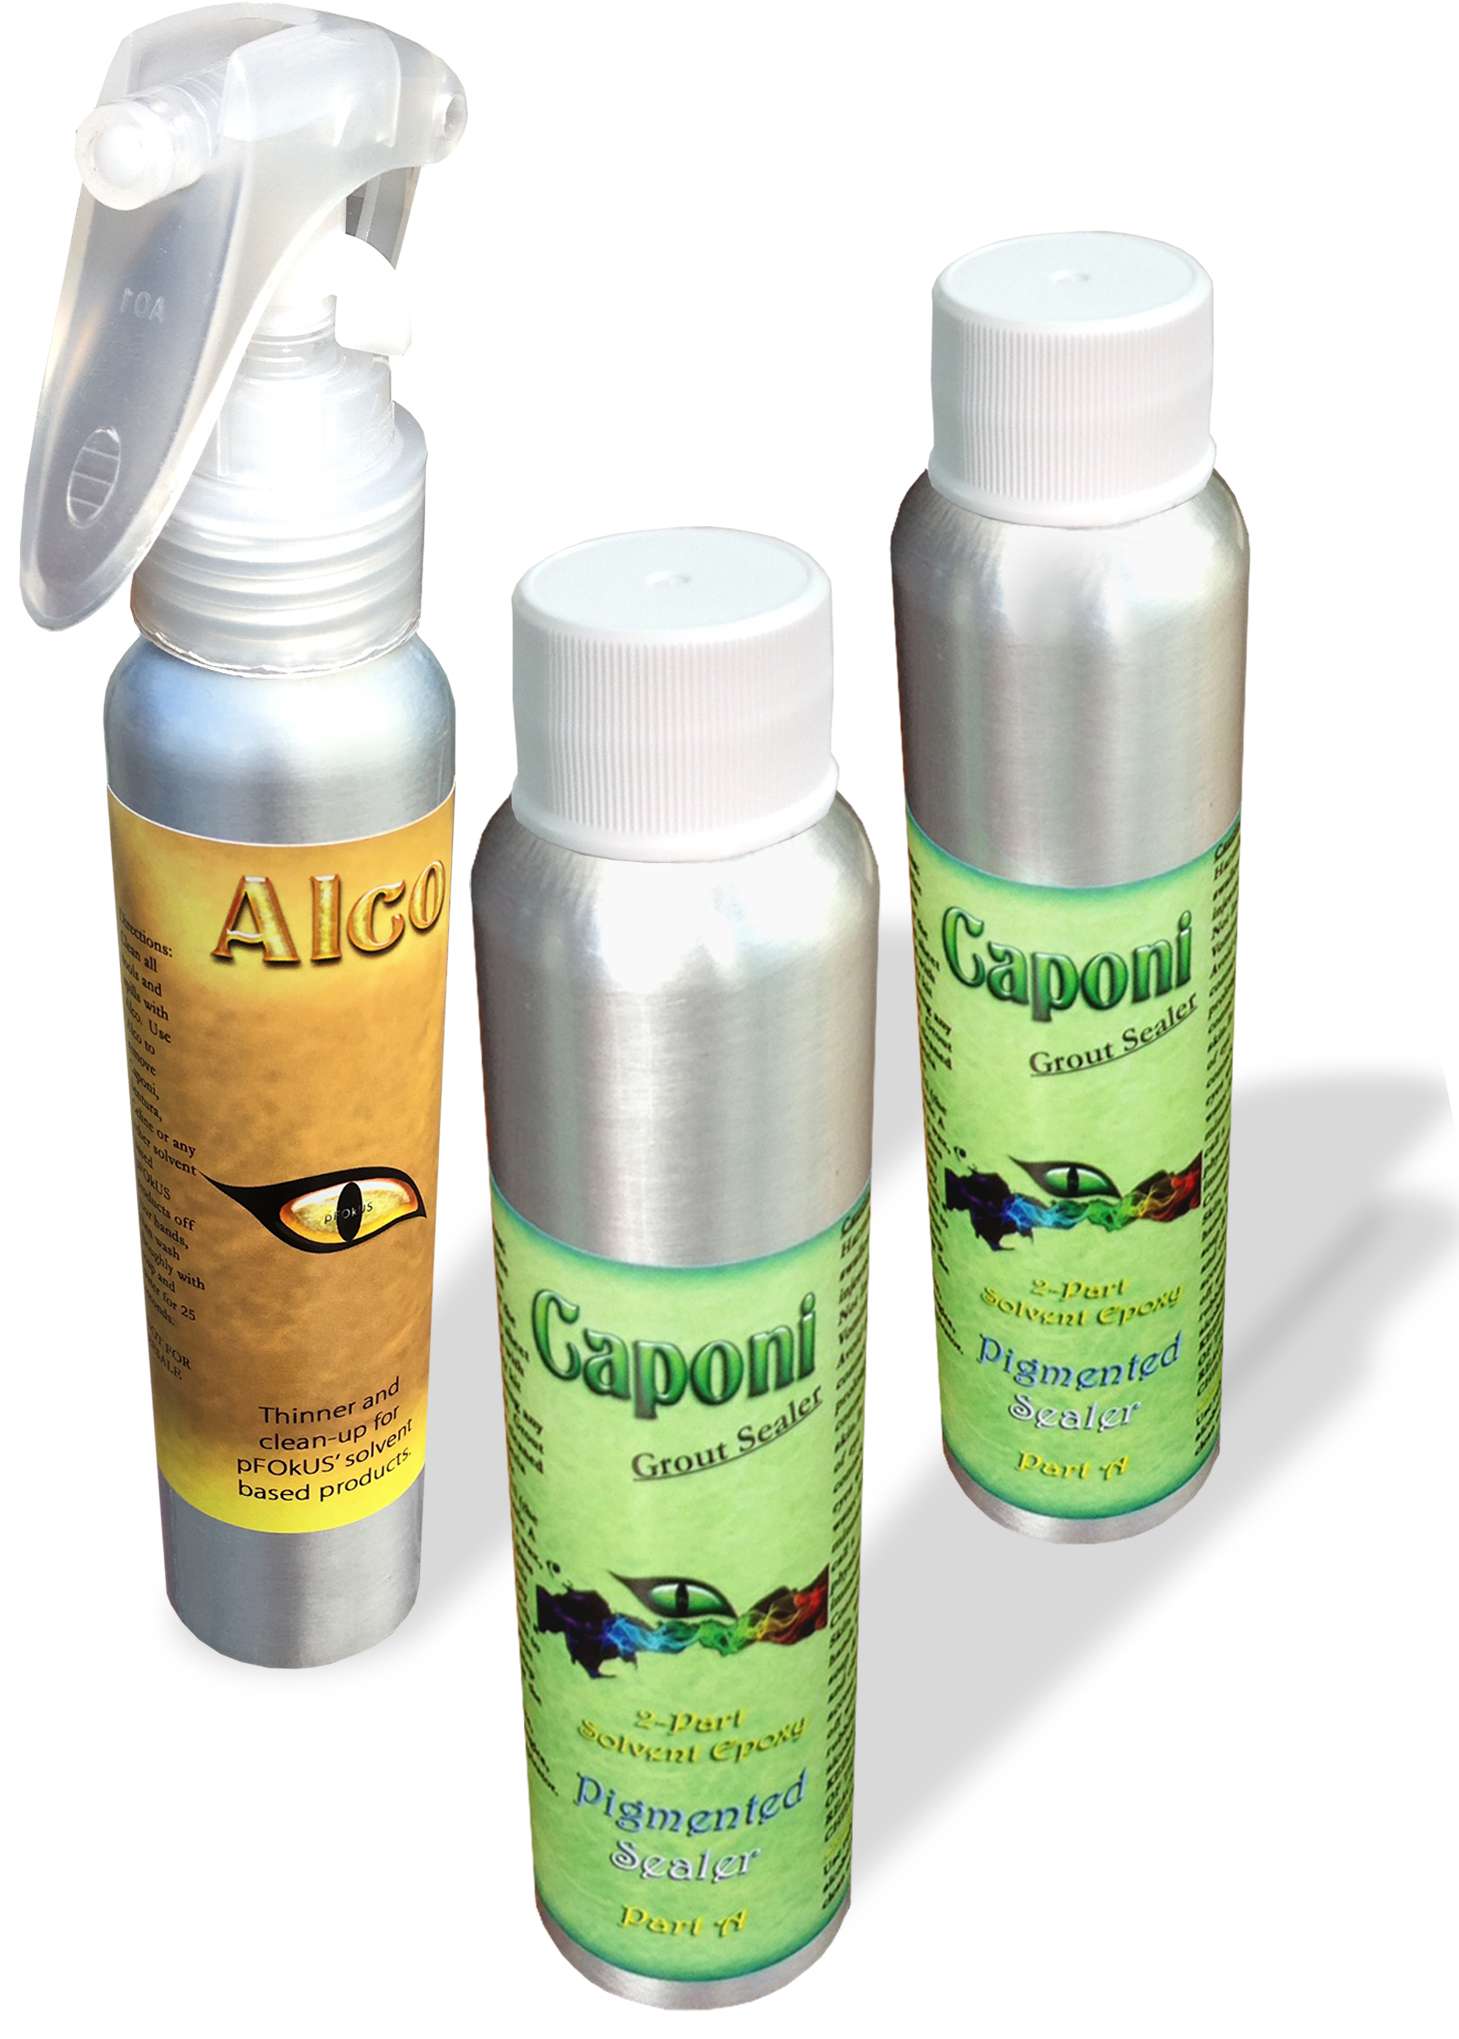 Caponi-Shower-Approved-Grout-Color-Epoxy-Restoration-Sealer-Imperia-cleaner-pfokus